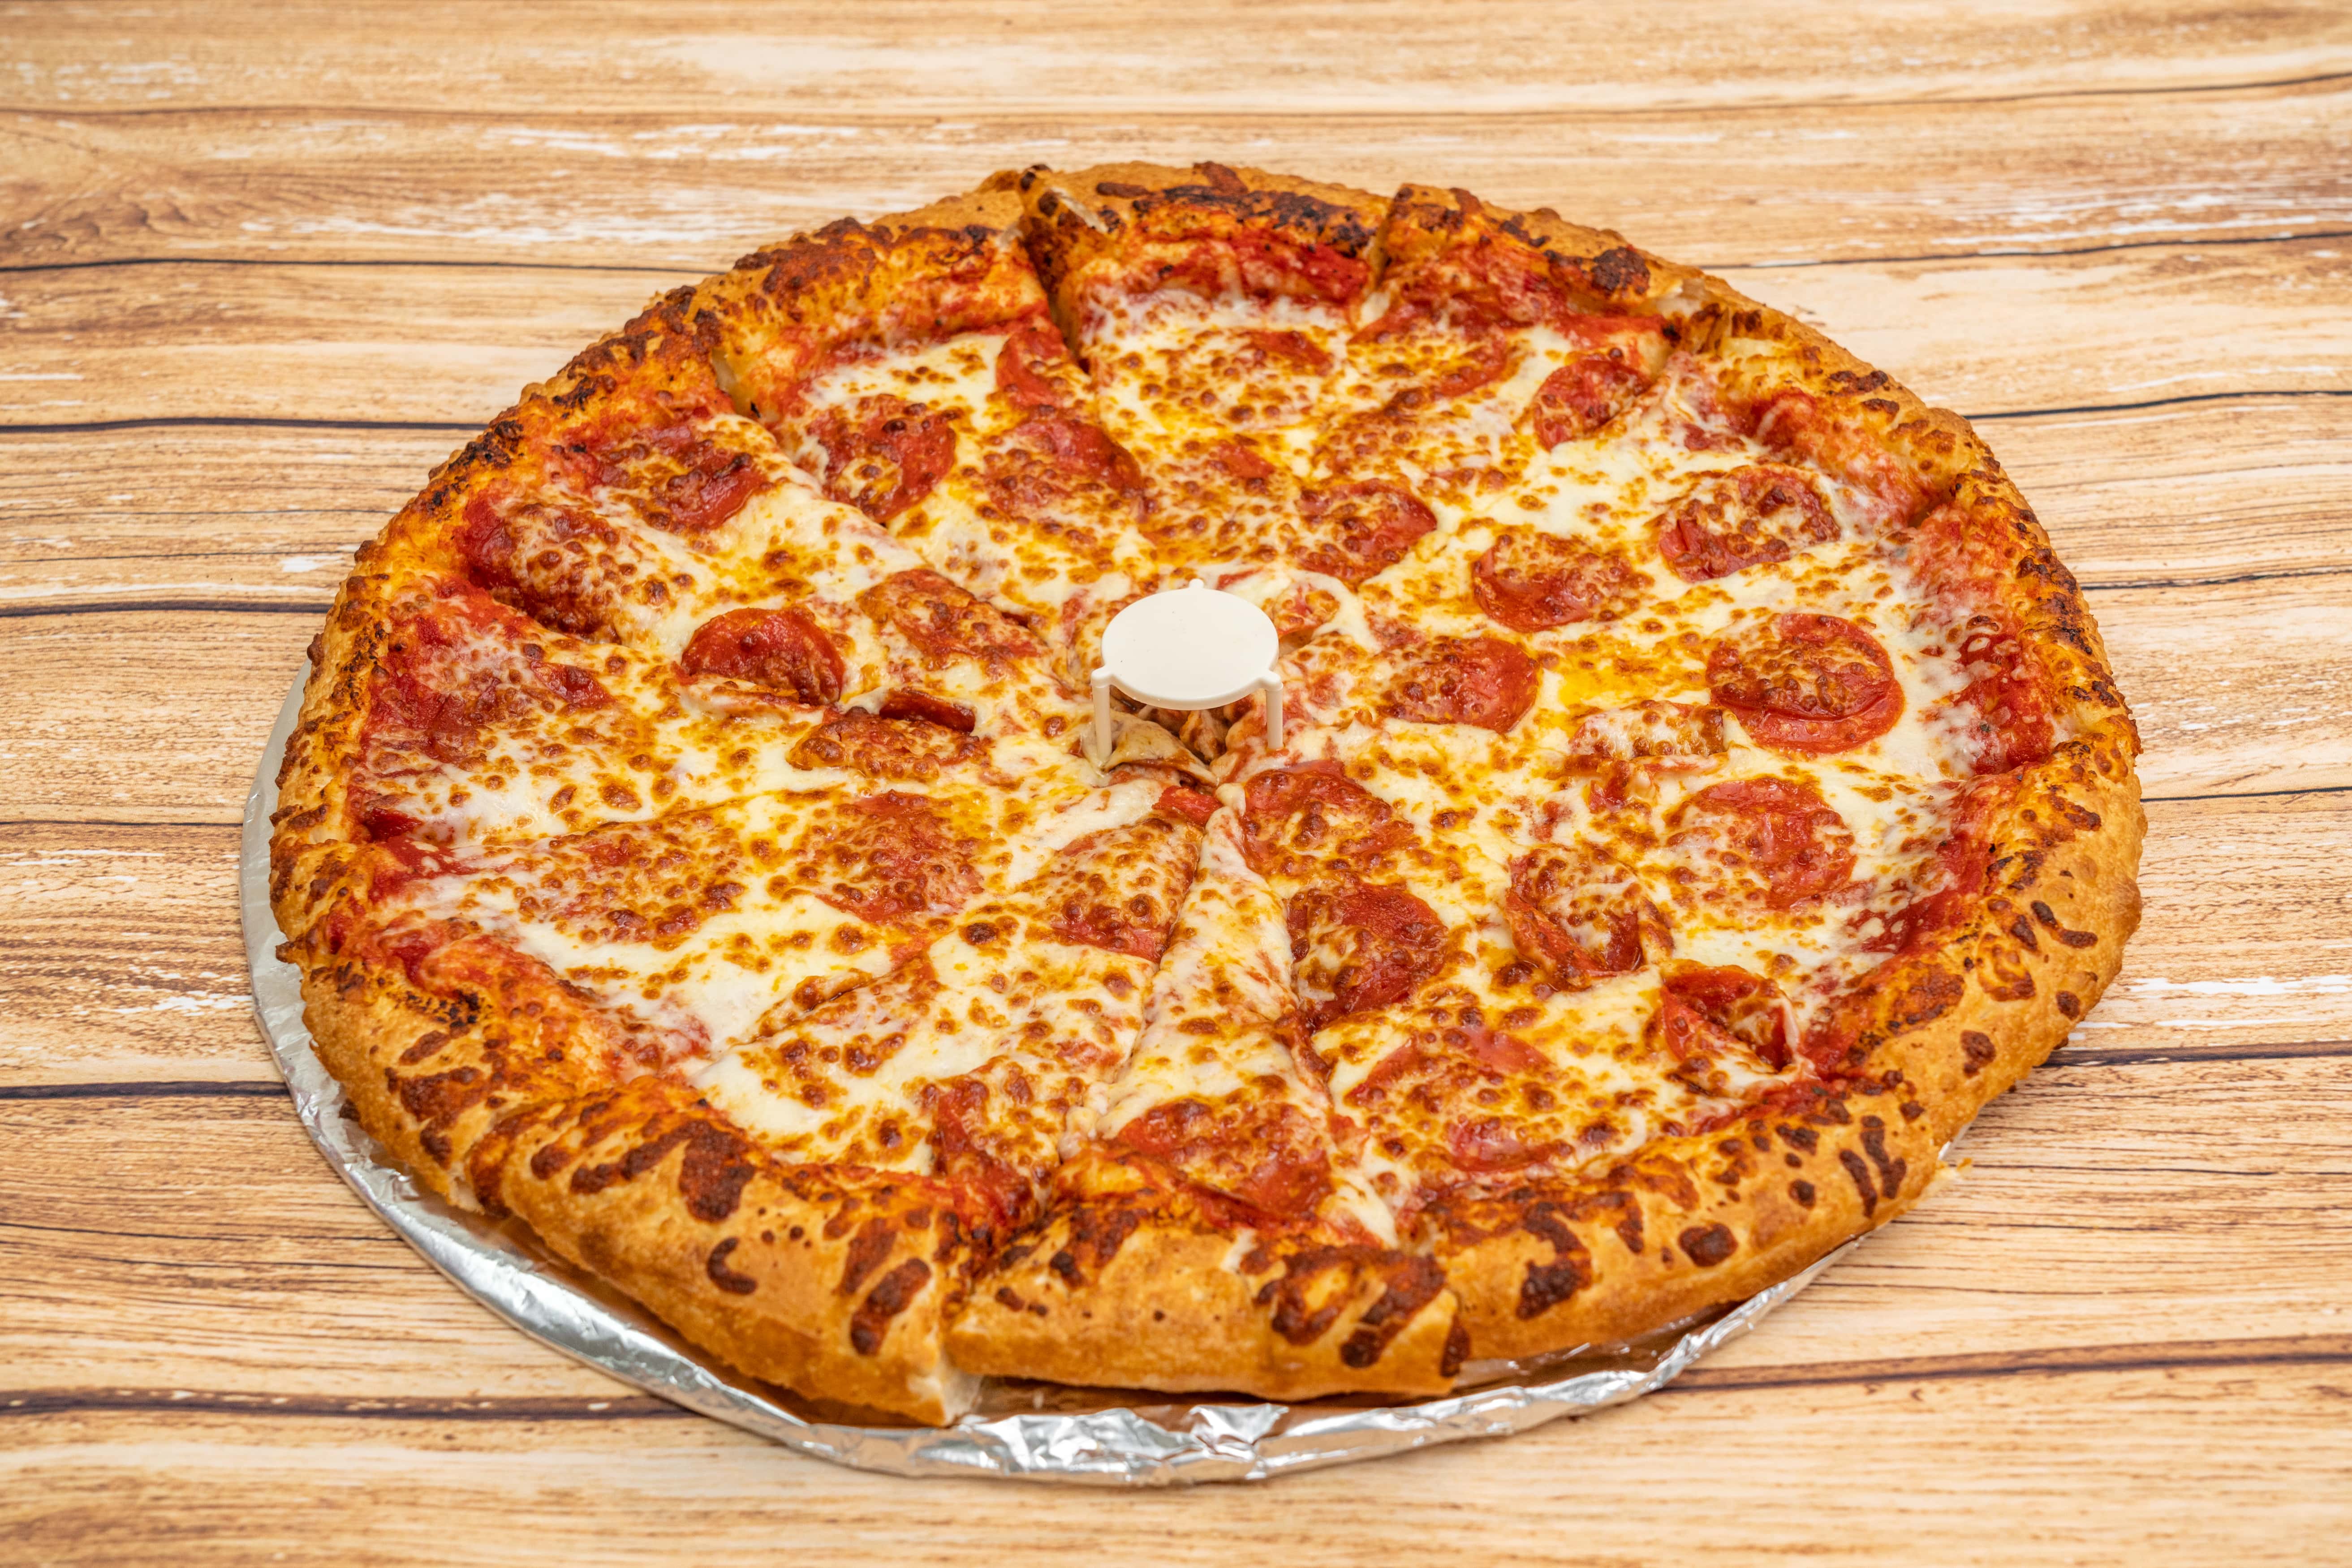 King Pizza - Houston, TX, US, italian pizza